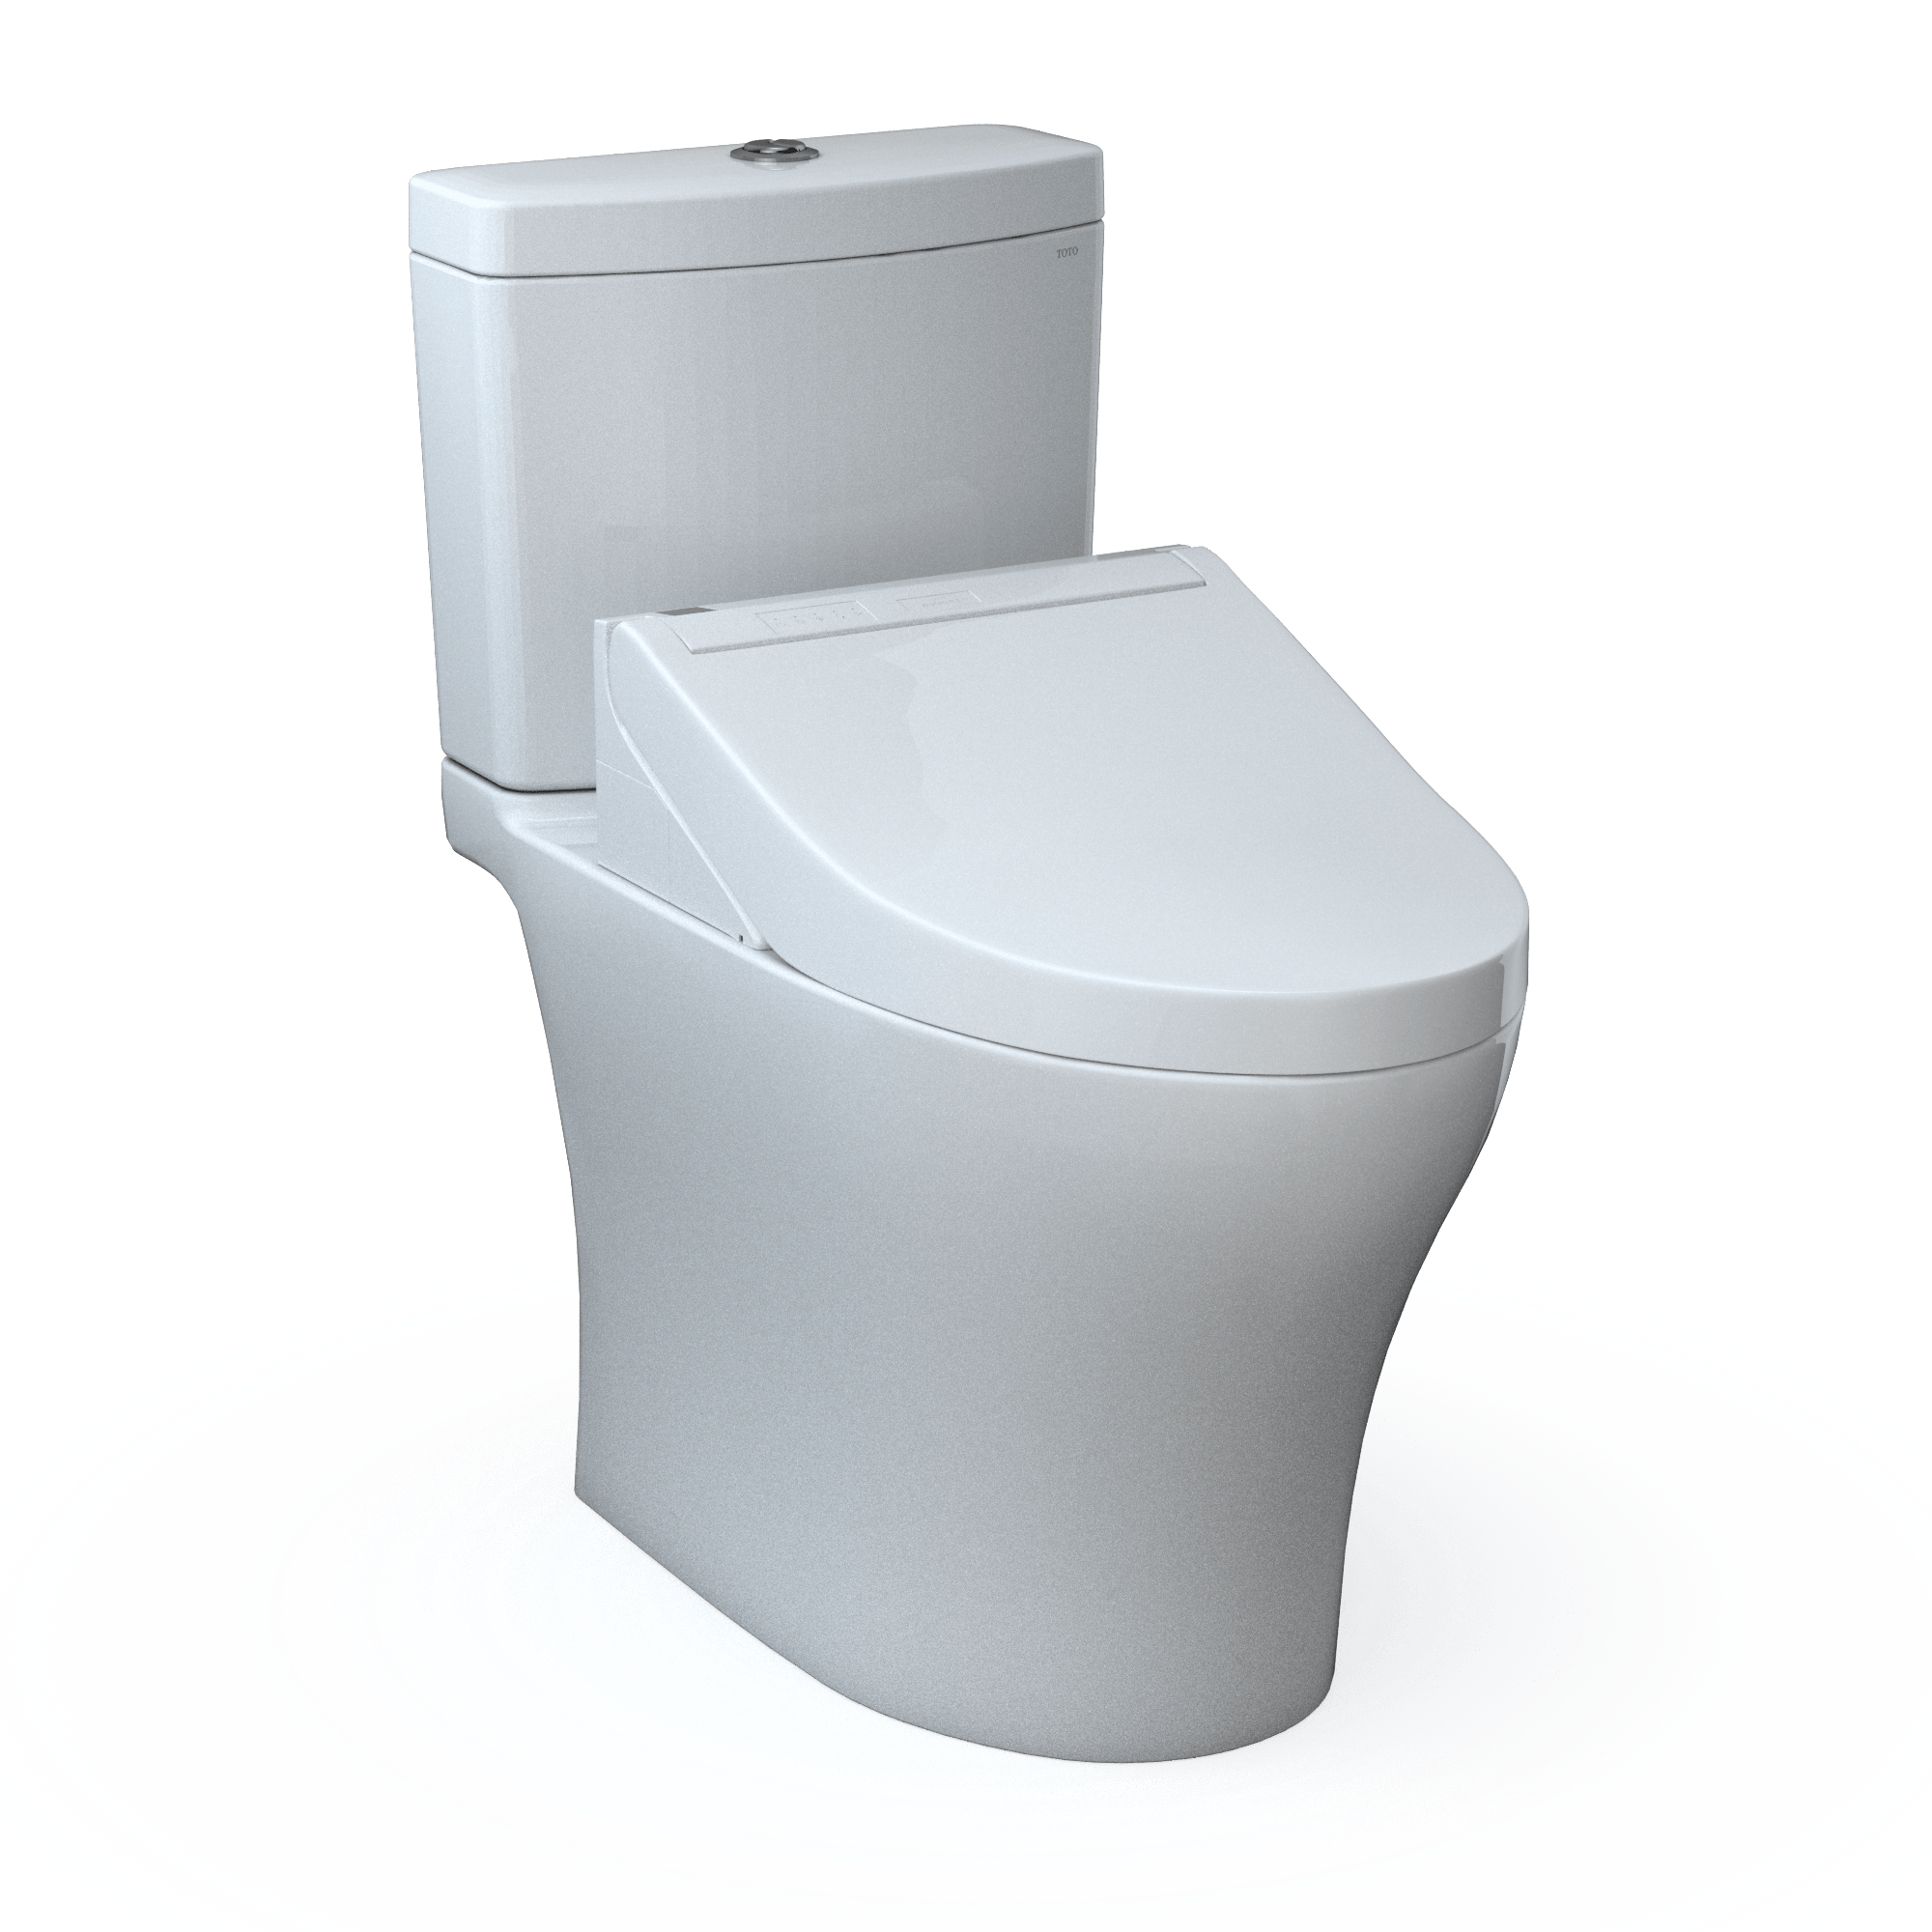 TOTO Bidet Toilet Combo TOTO AQUIA® IV - WASHLET®+ C5 TWO-PIECE TOILET - 1.28 GPF & 0.8 GPF - UNIVERSAL HEIGHT